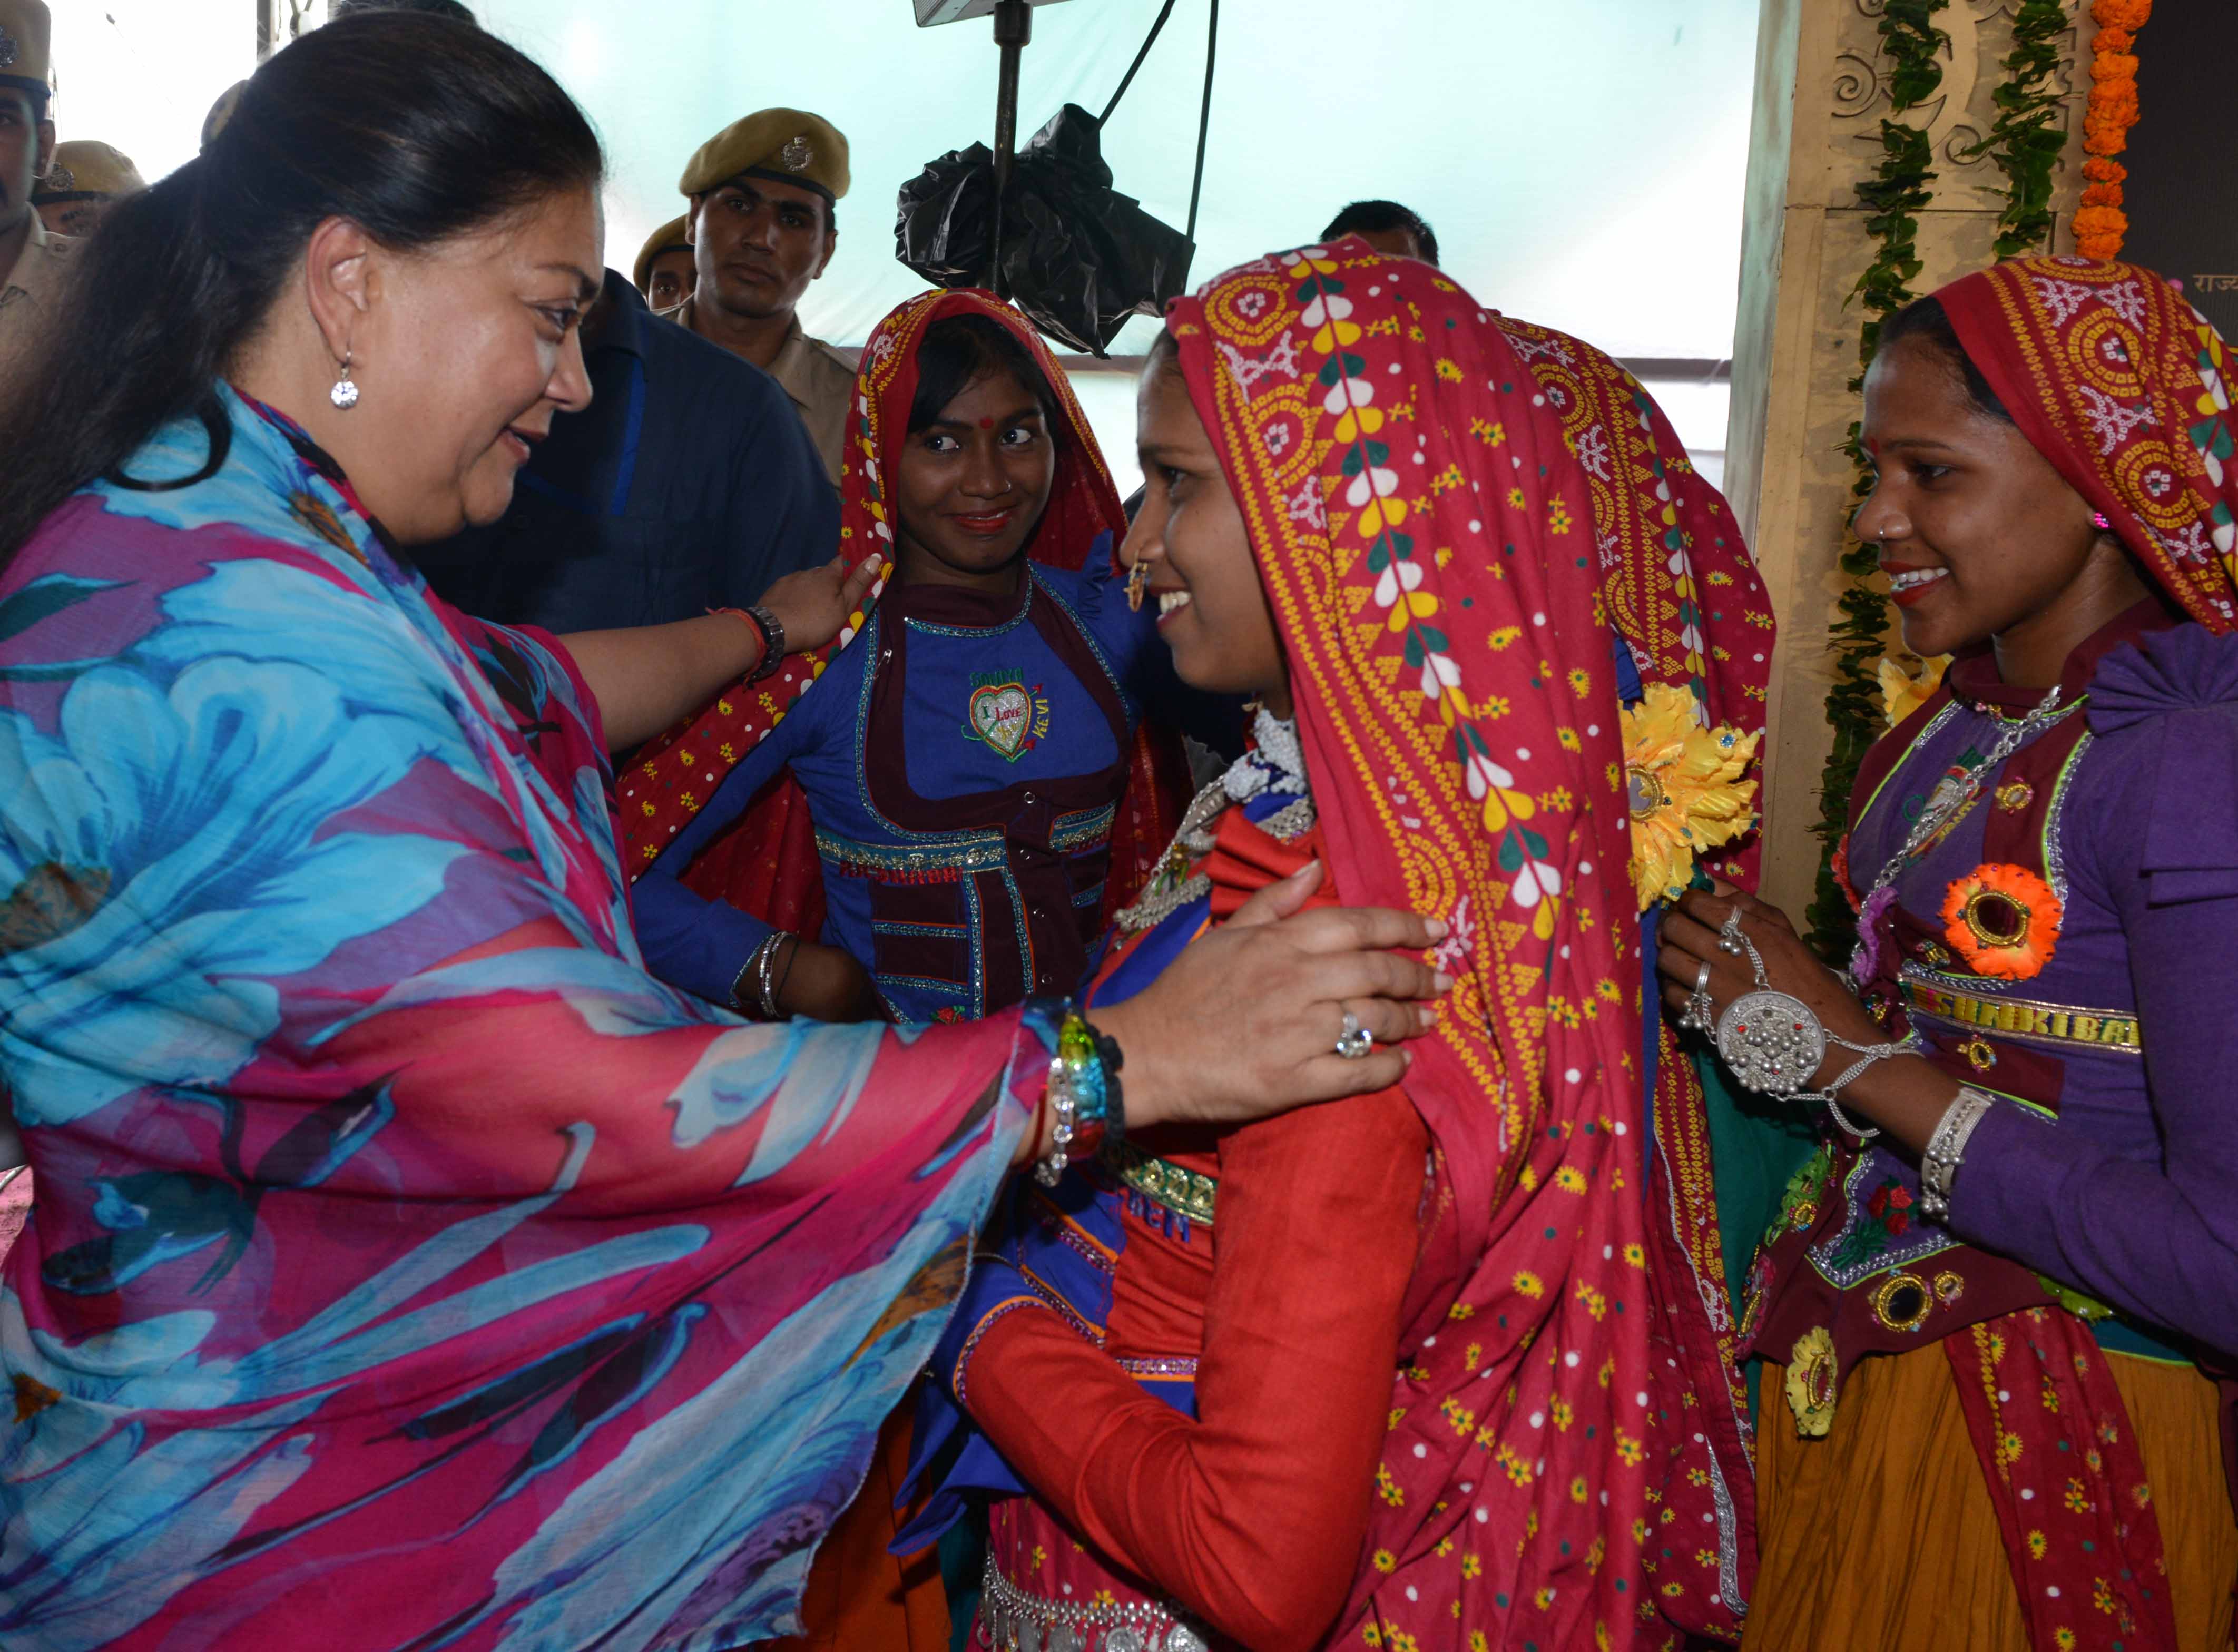 Chief Minister of Rajasthan Vasundhara Raje